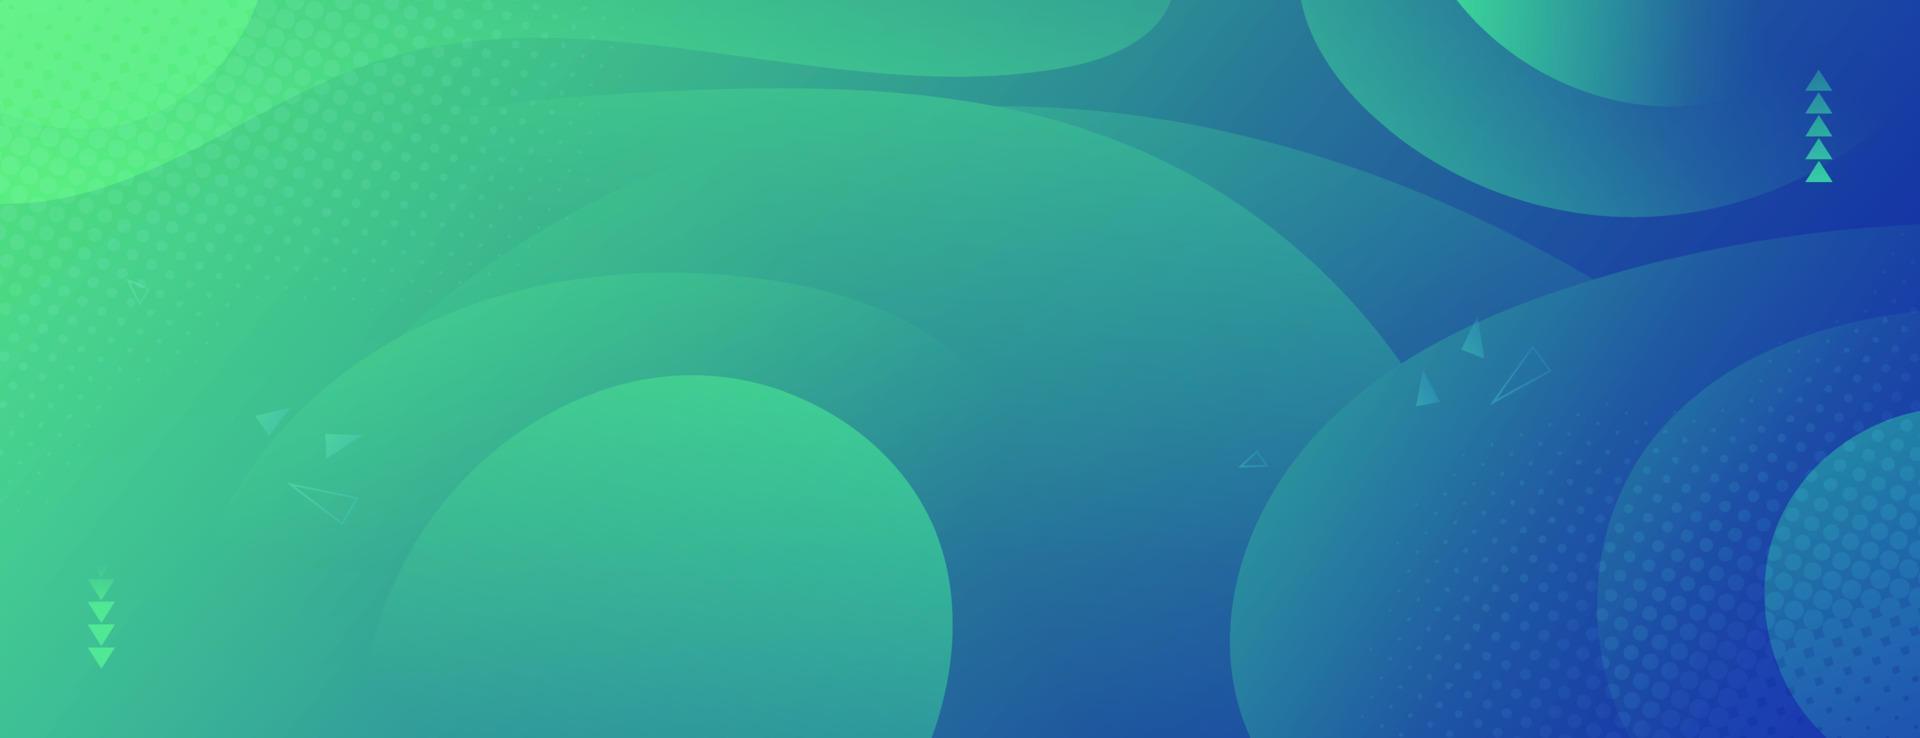 Abstract Gradient Green Blue liquid Wave Background vector